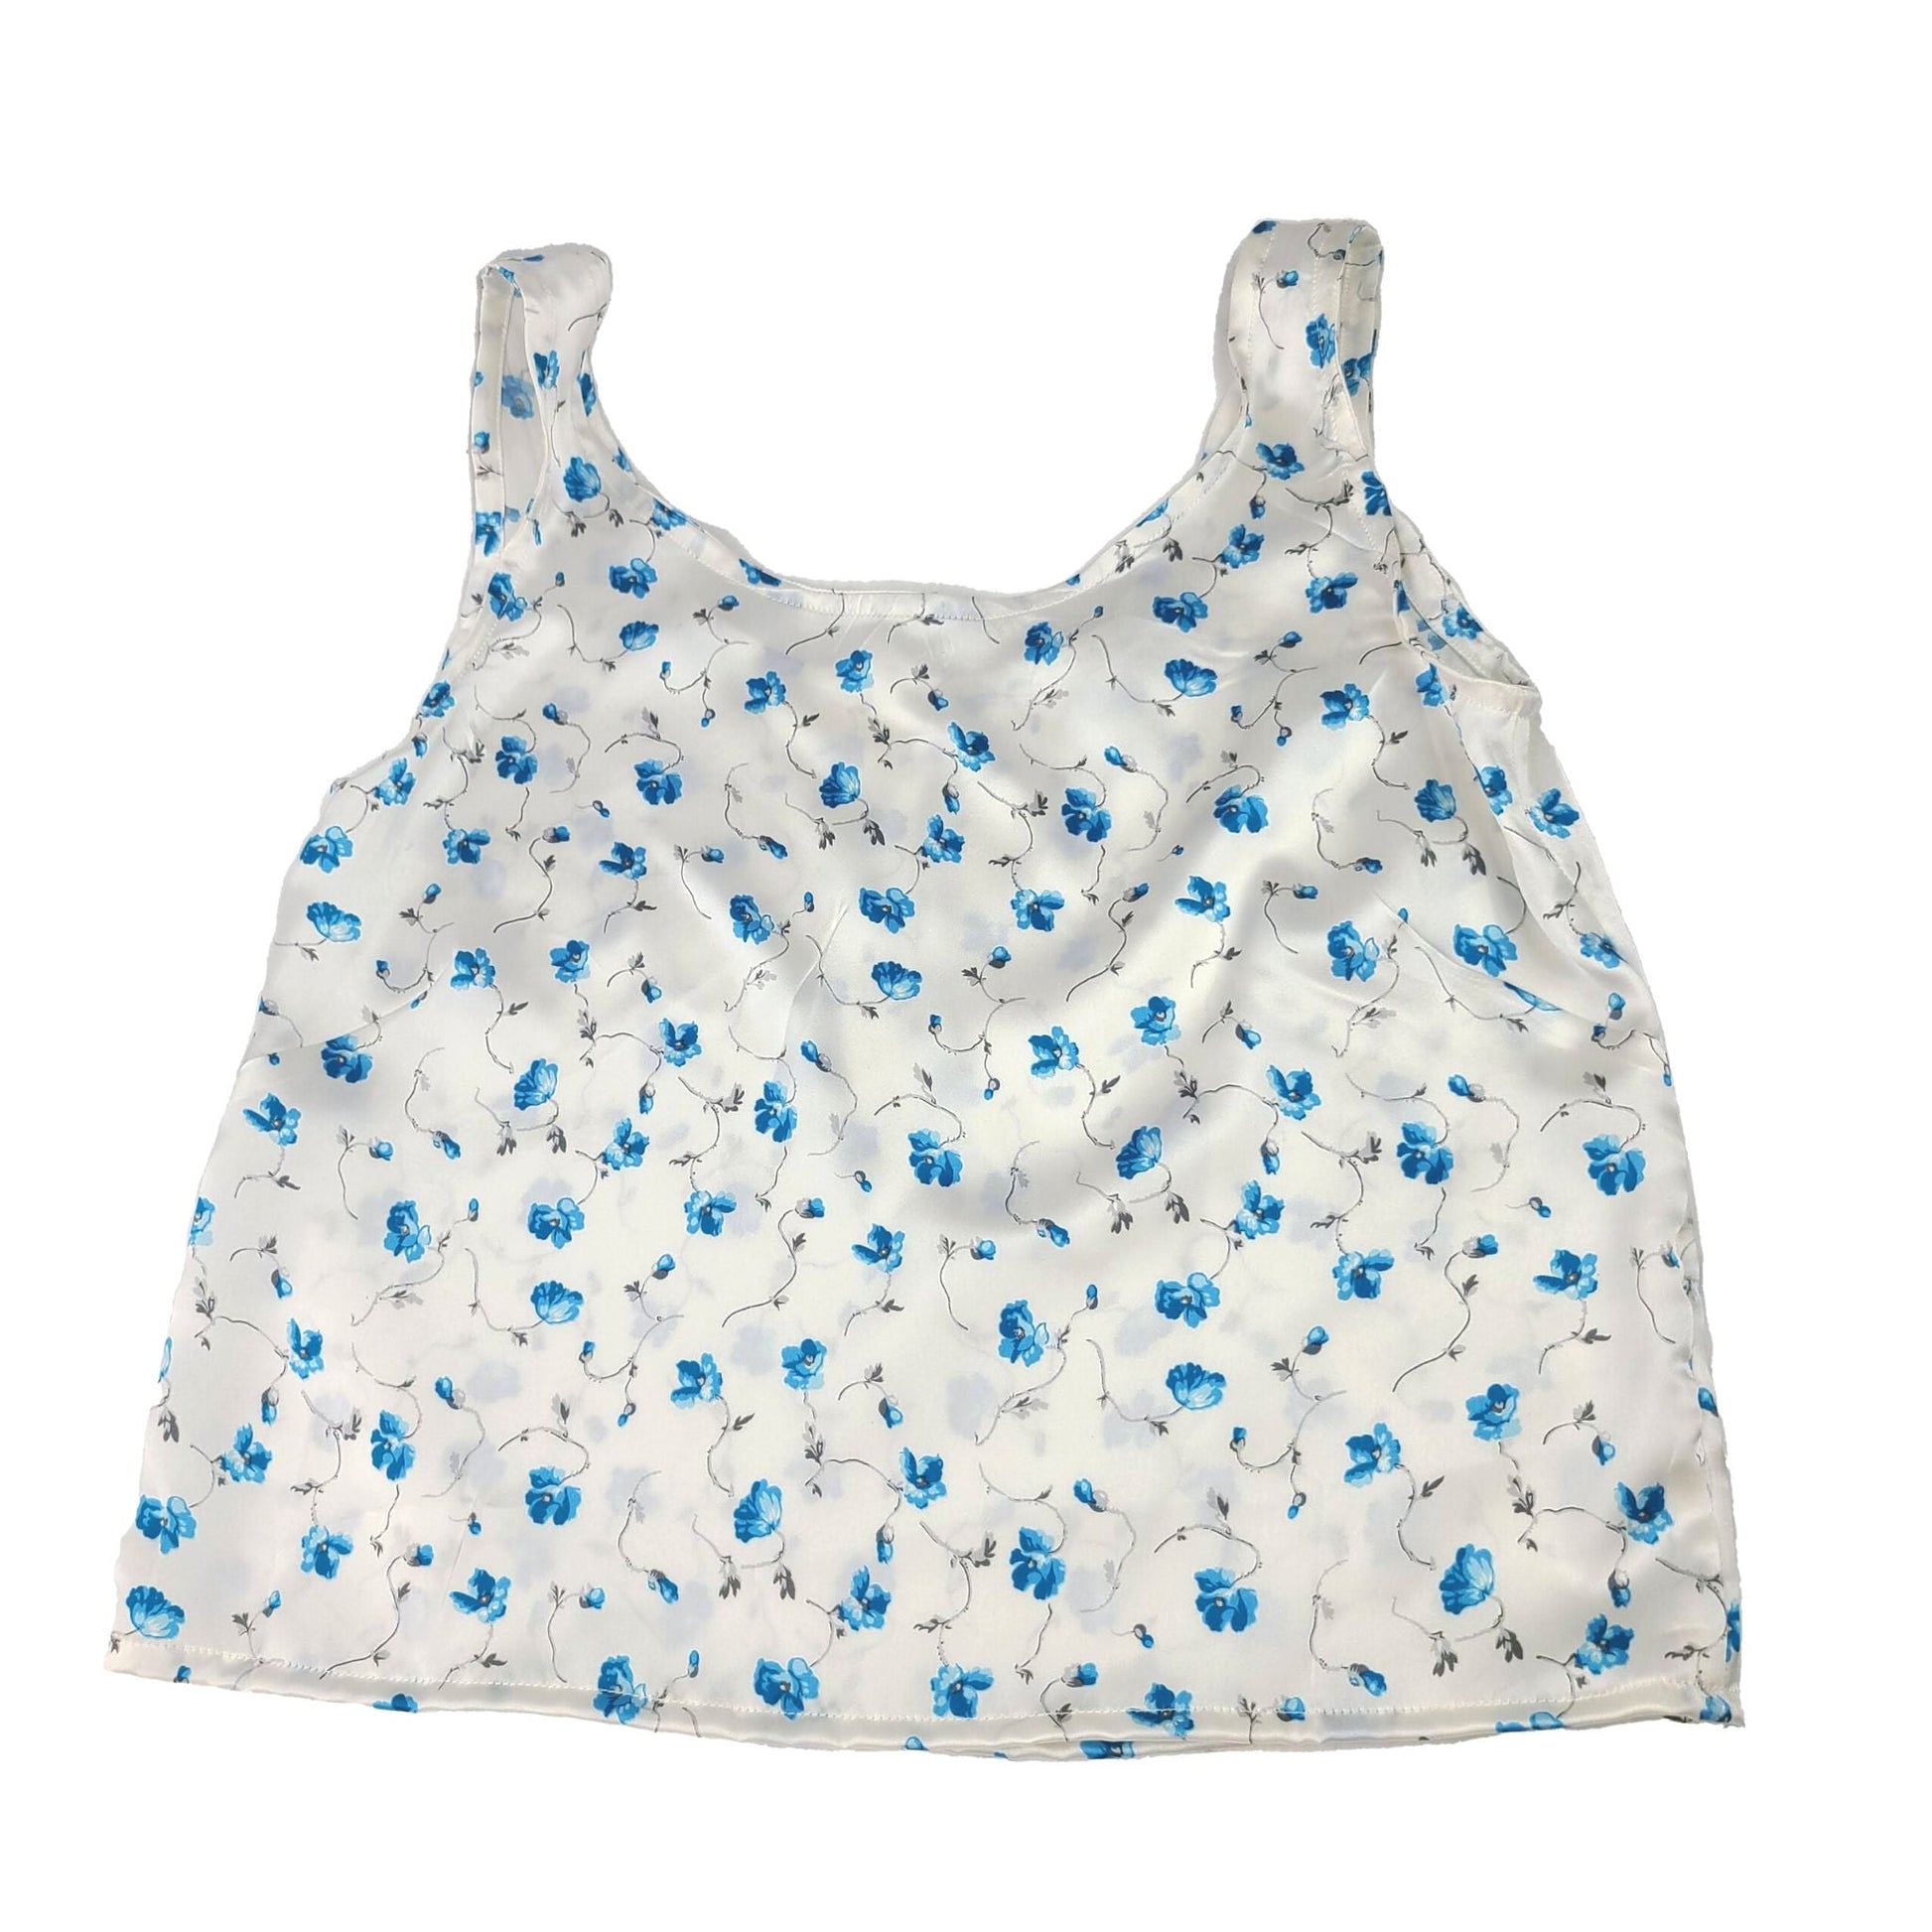 Silk Pajamas Short Set - White and Blue Floral Print - RBelliard